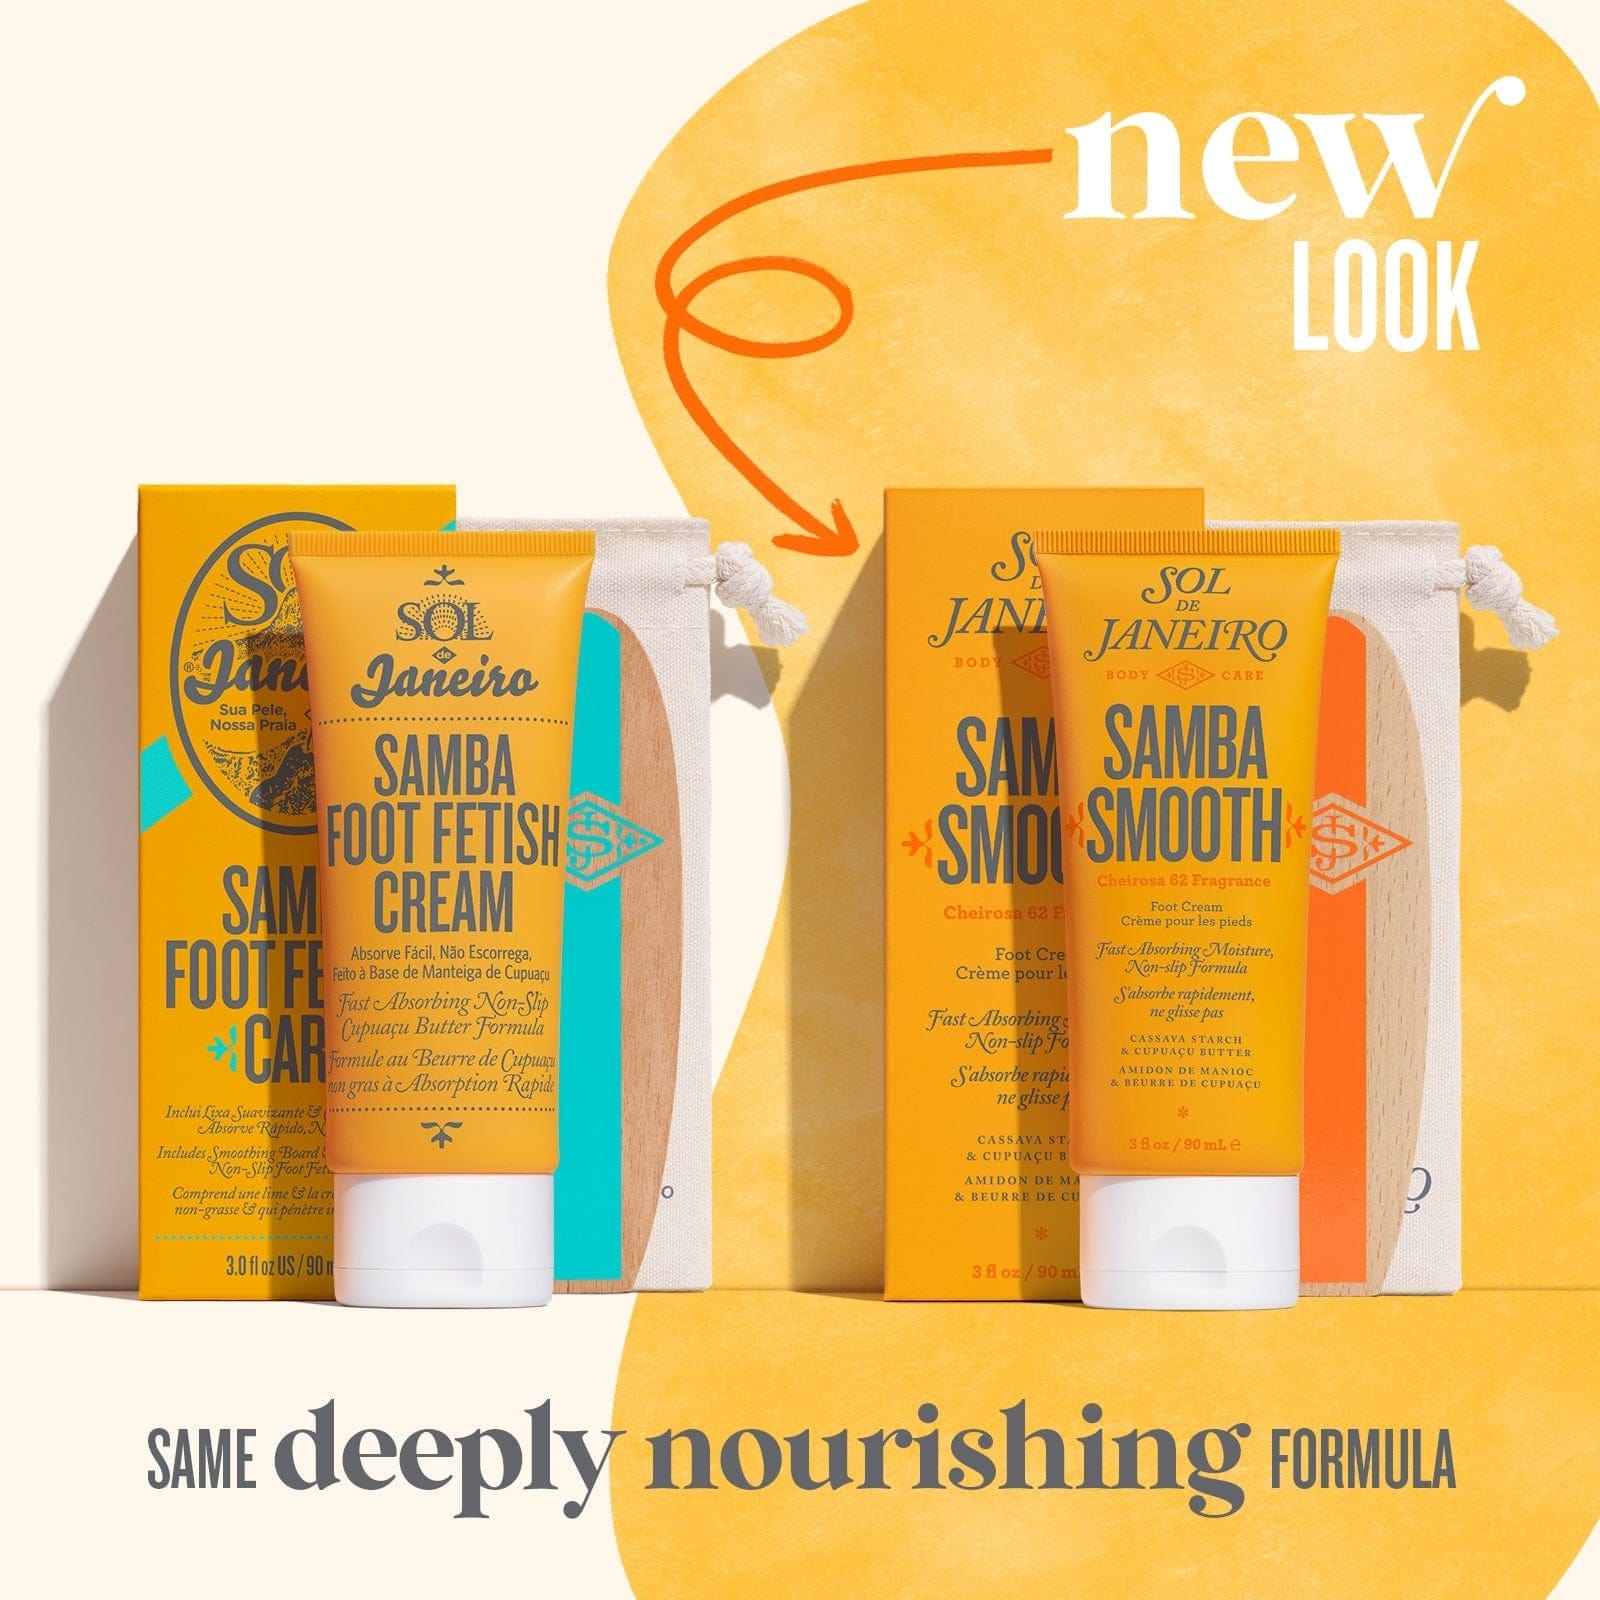 New look - same deeply nourishing formula